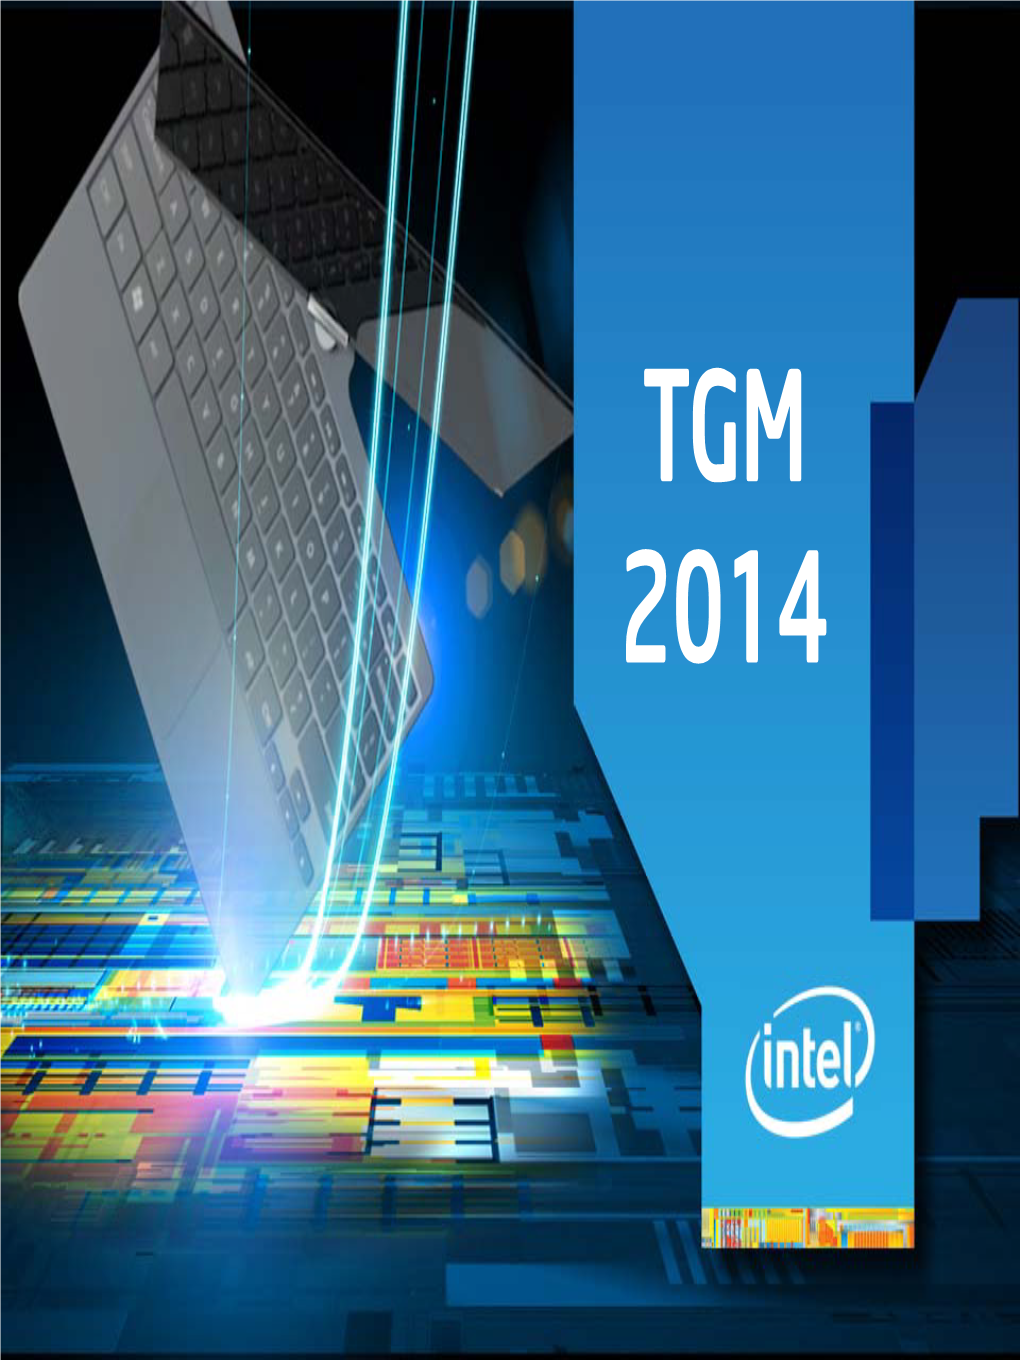 TGM 2014 Intel Realsense Keynote